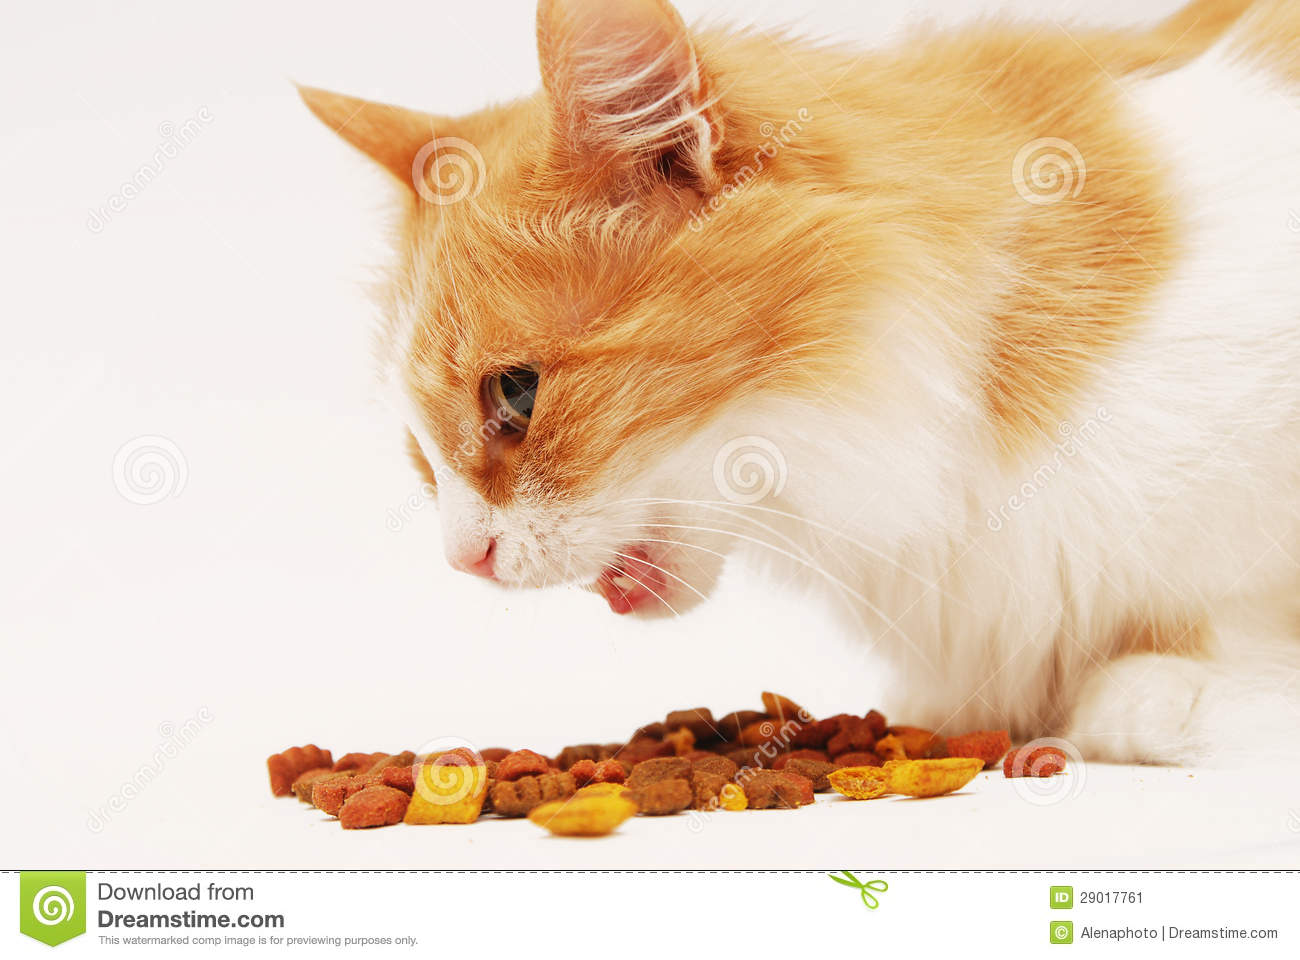 Cat Eating Food Stock Image   Image  29017761